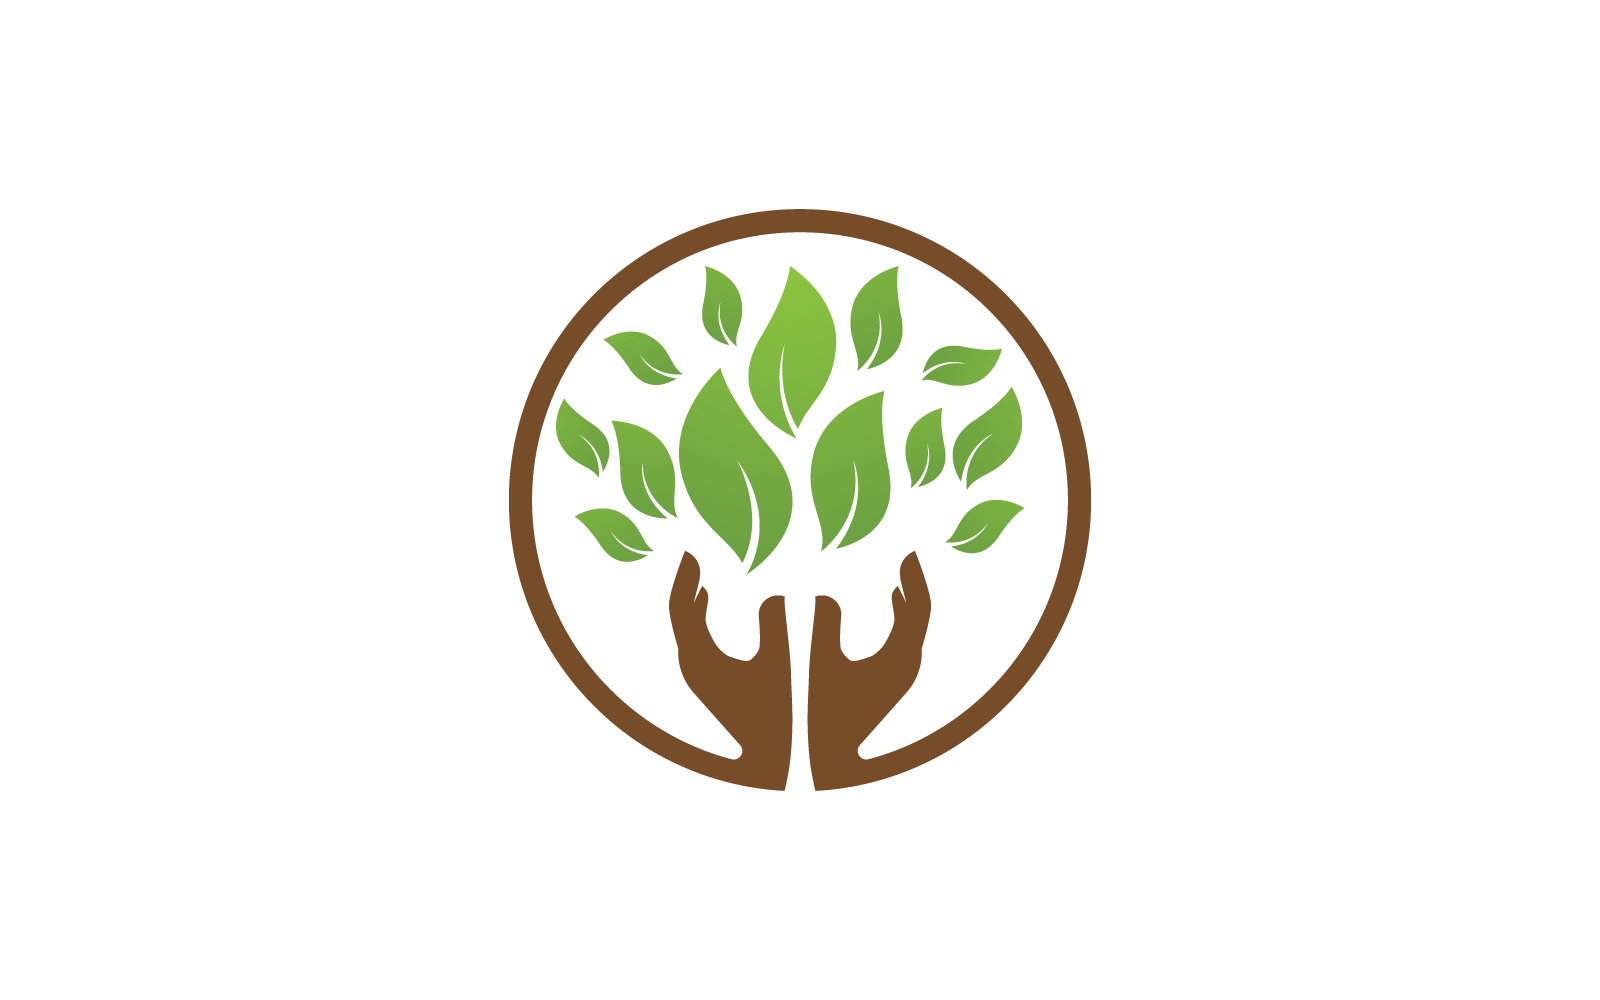 Save nature ecology logo hand and leaf flat design template illustration